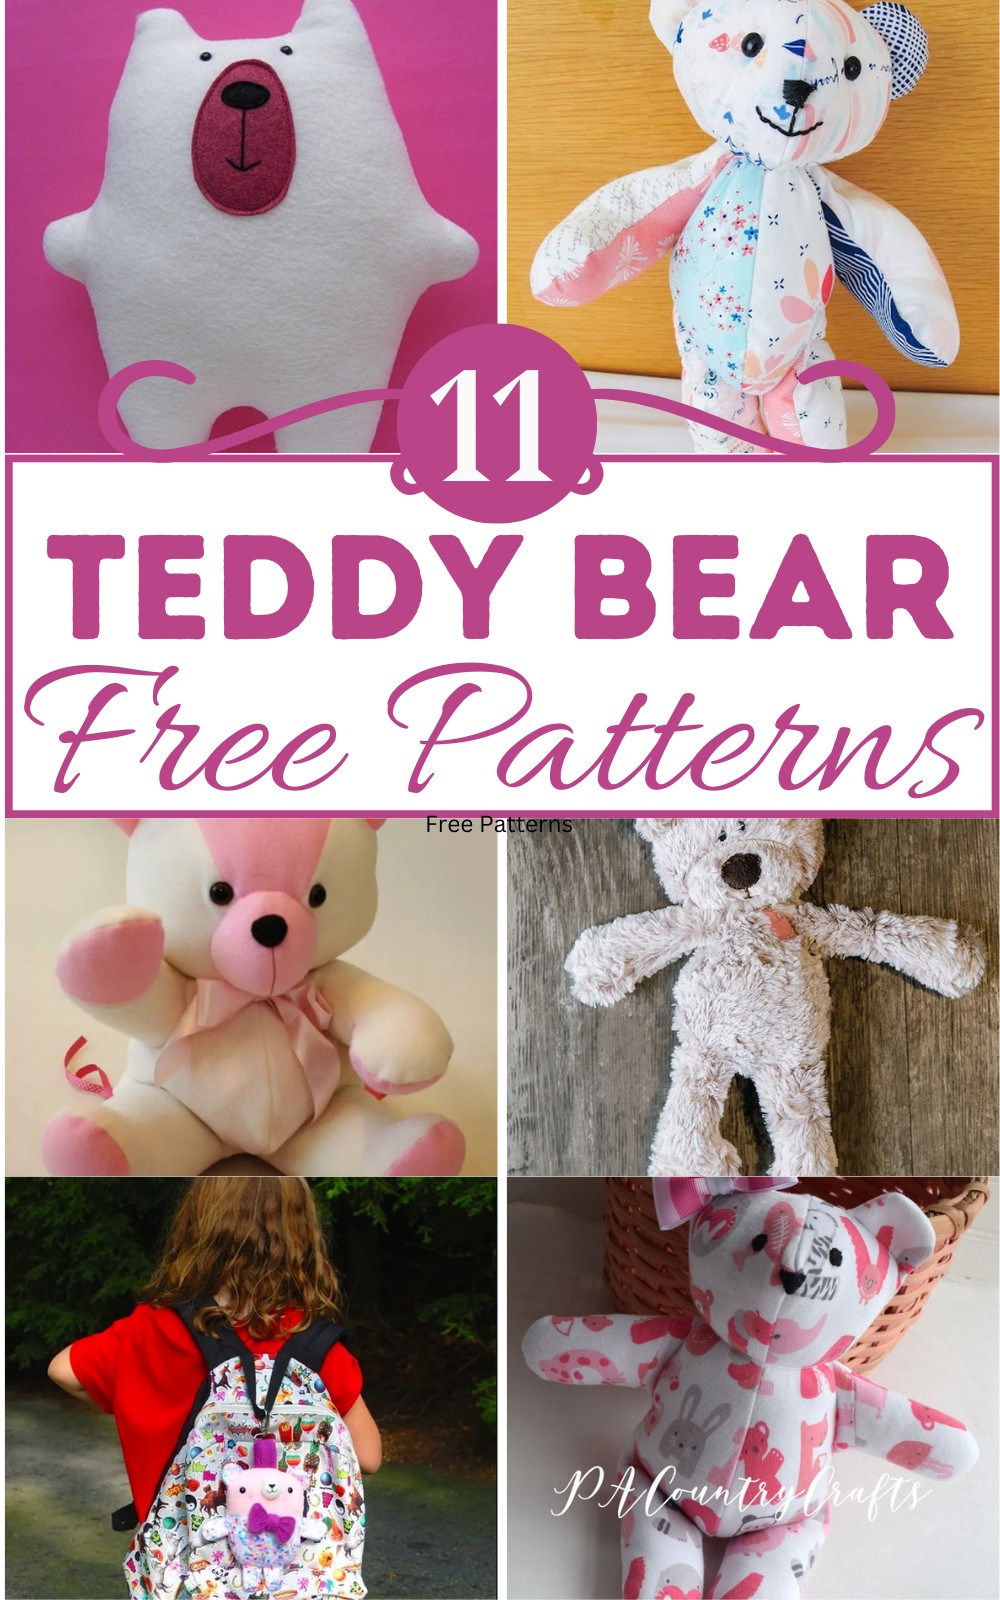 Free Teddy Bear Patterns 1